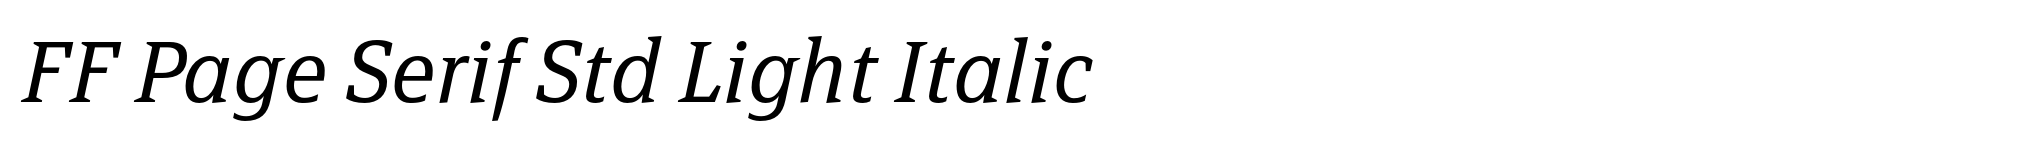 FF Page Serif Std Light Italic image